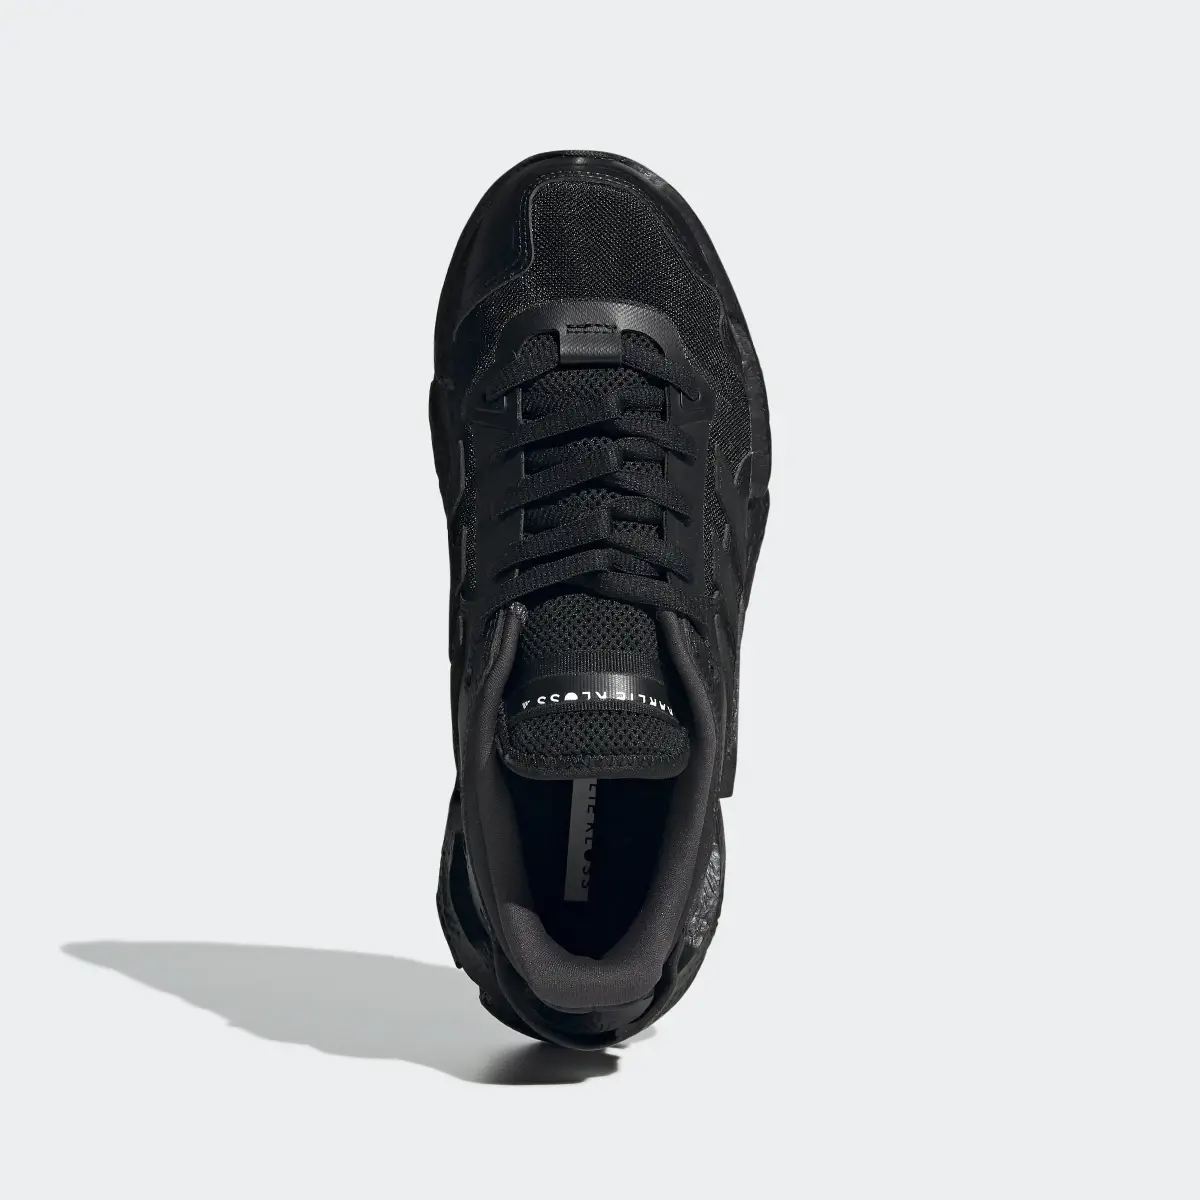 Adidas x Karlie Kloss X9000 Shoes. 3